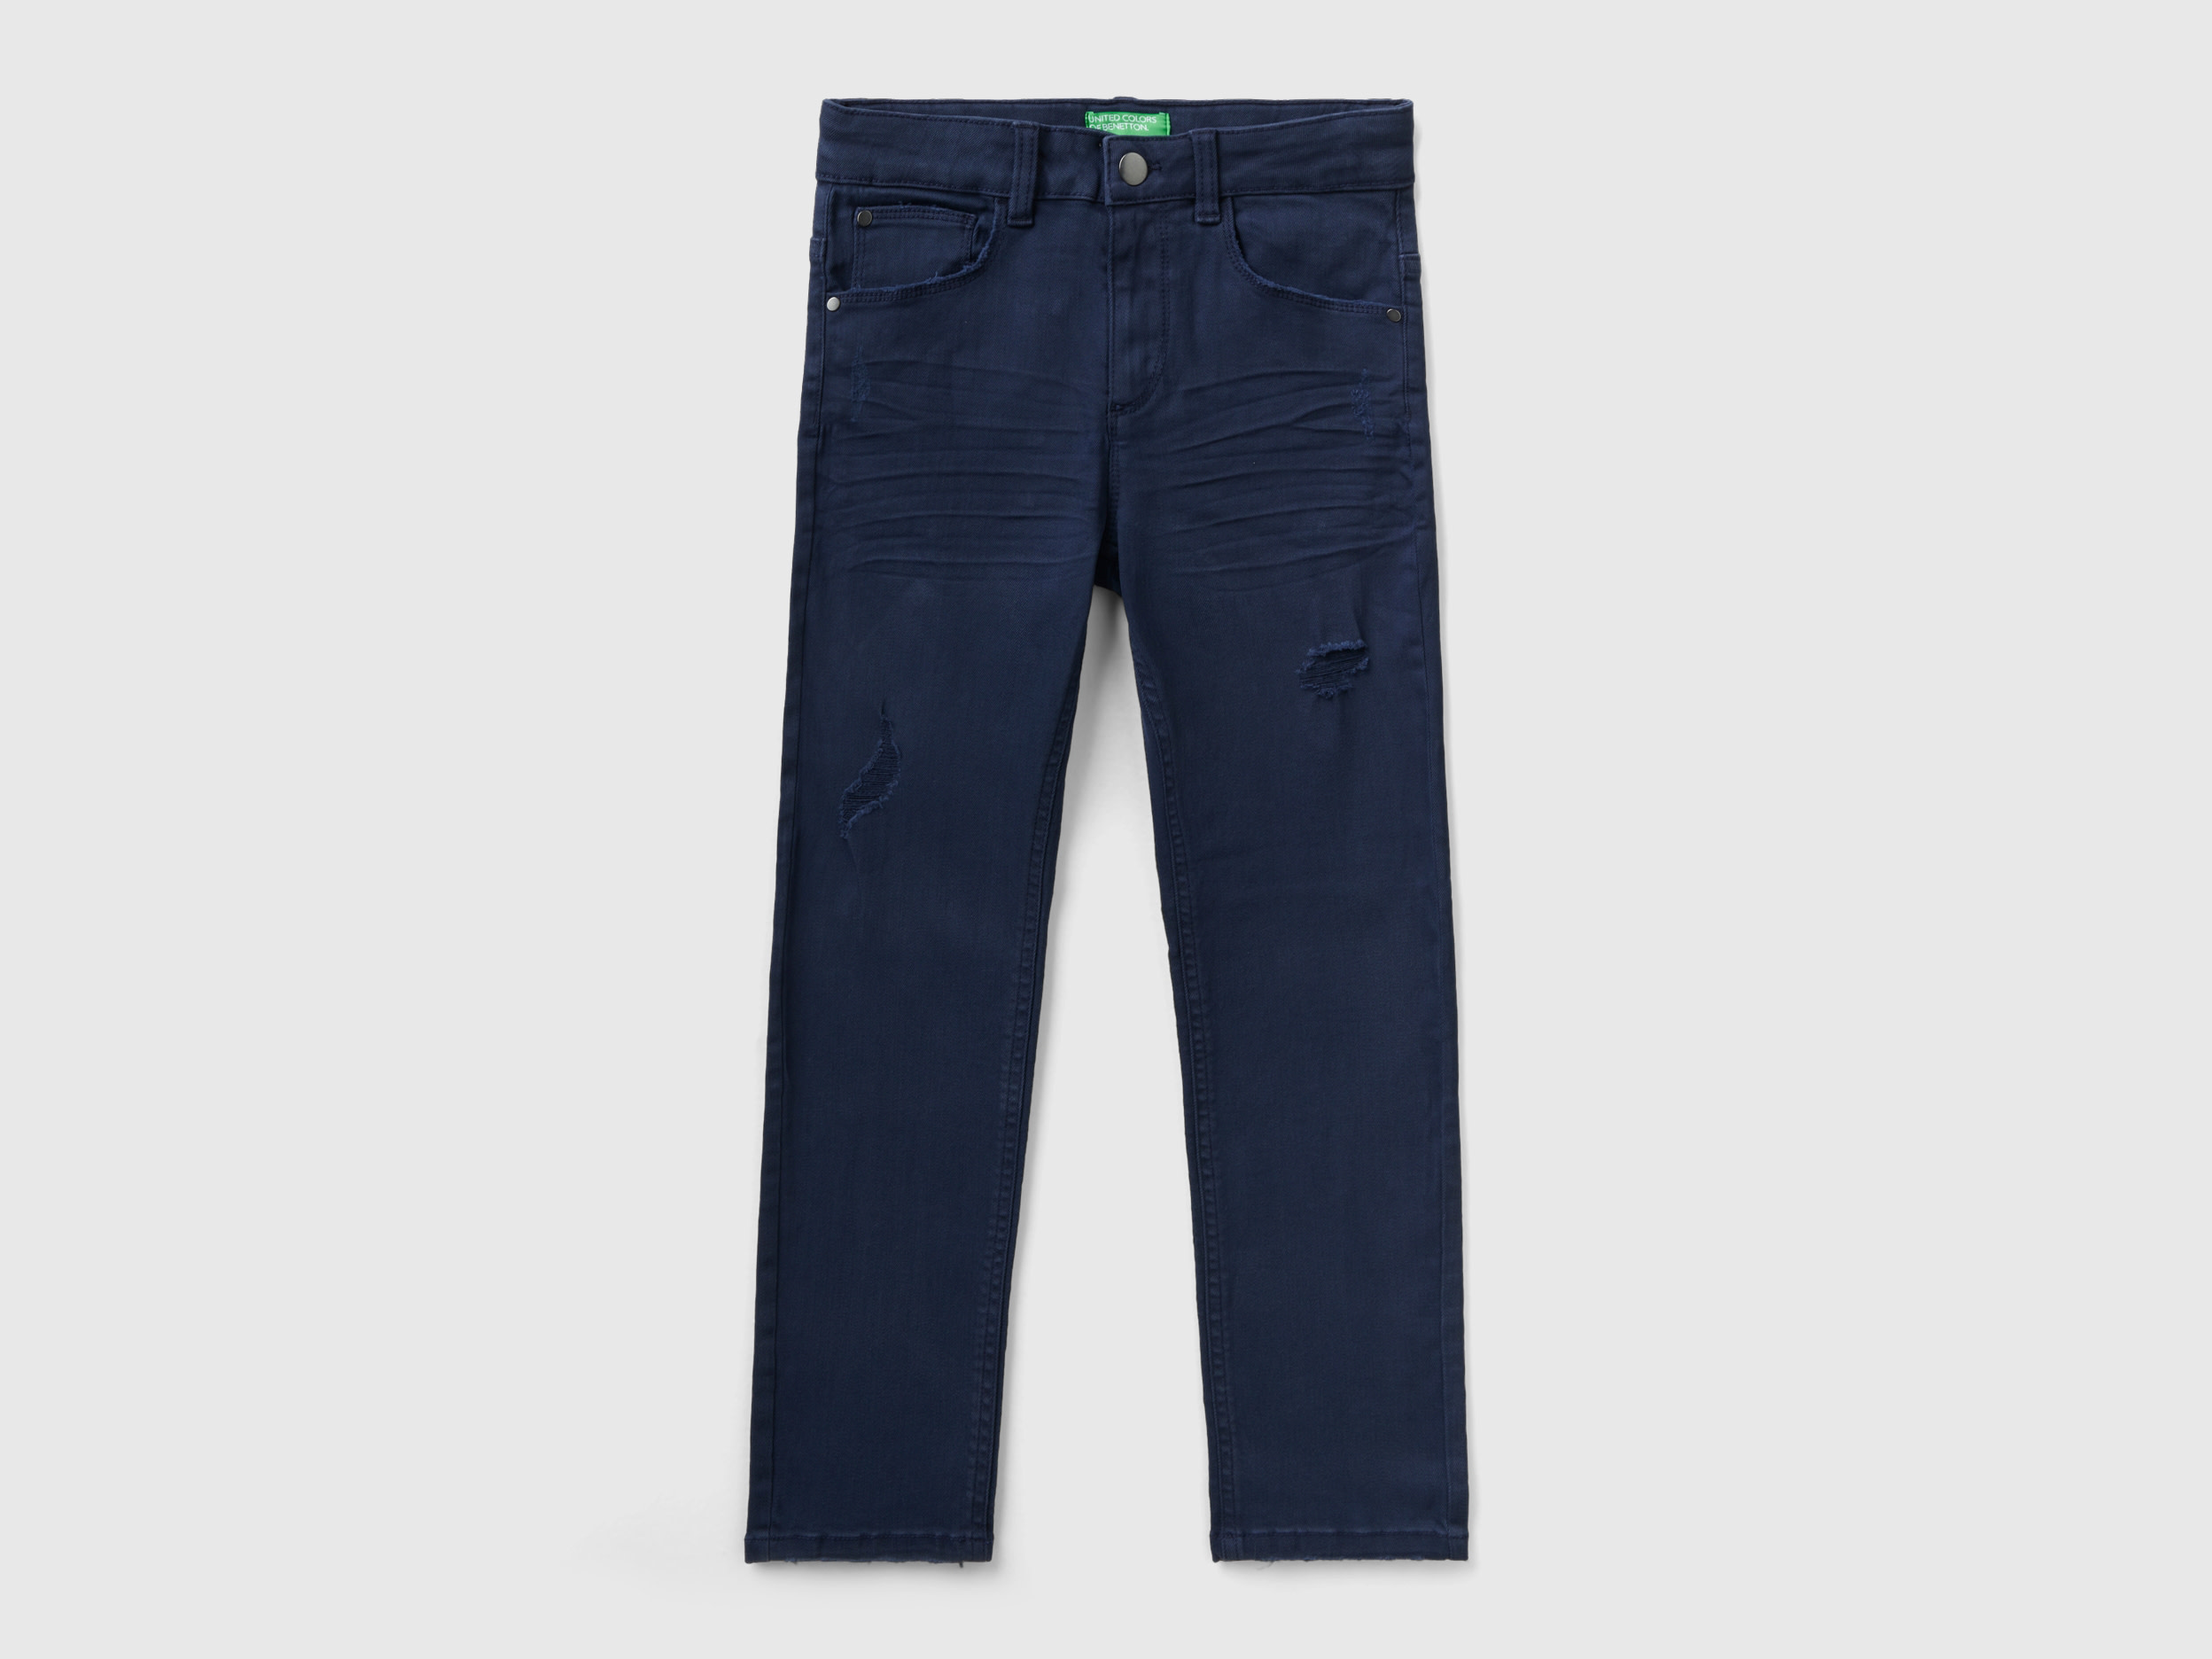 Benetton, Stretch Jeans With Tears, size L, Dark Blue, Kids